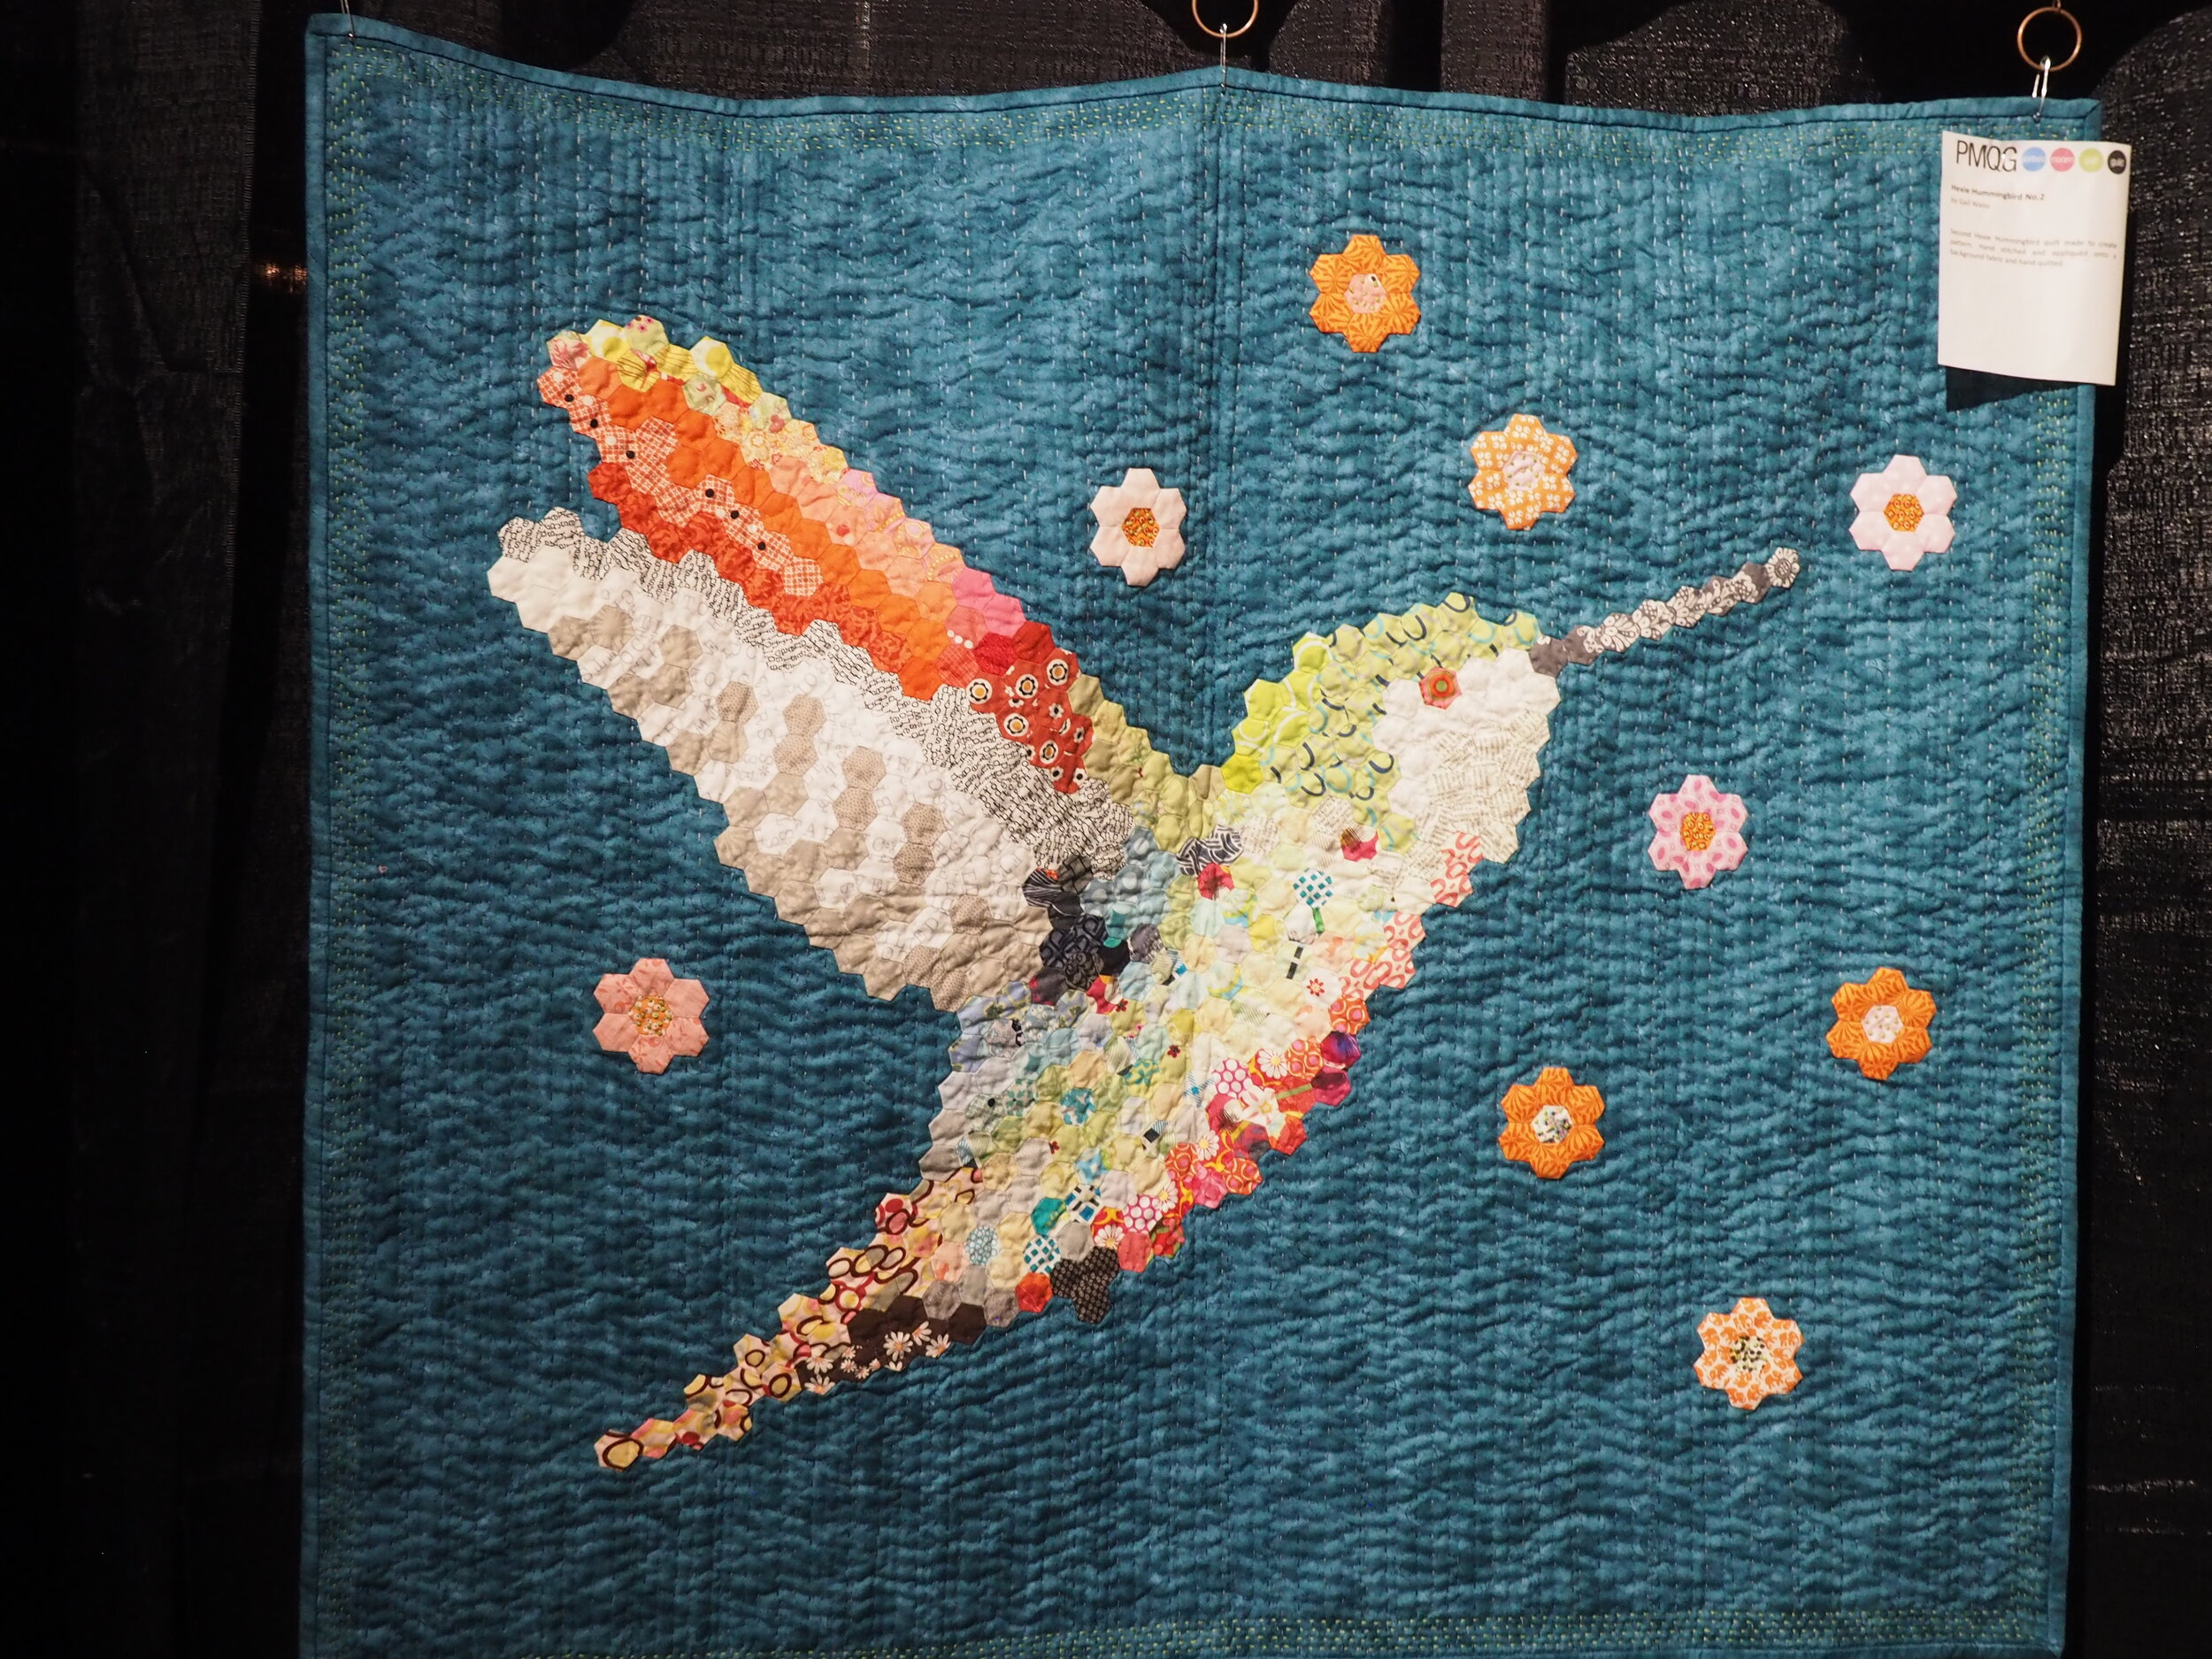 Hexie Hummingbird Number 2 by Gail Weiss